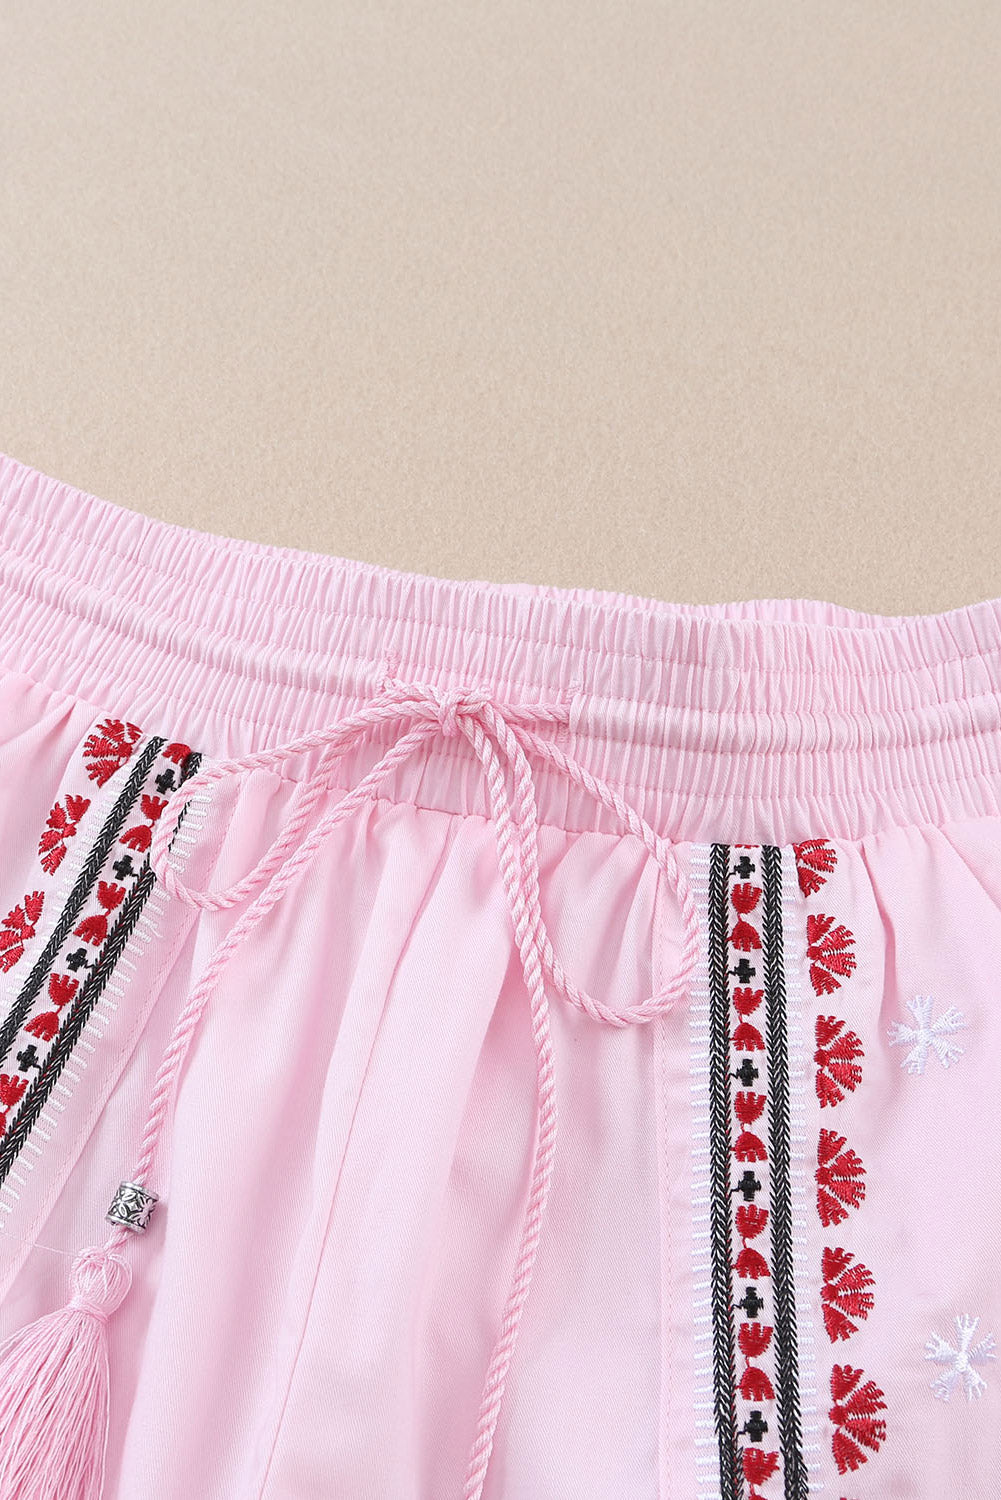 Pink Boho Embroidered Floral Tasseled Drawstring Waist Casual Shorts